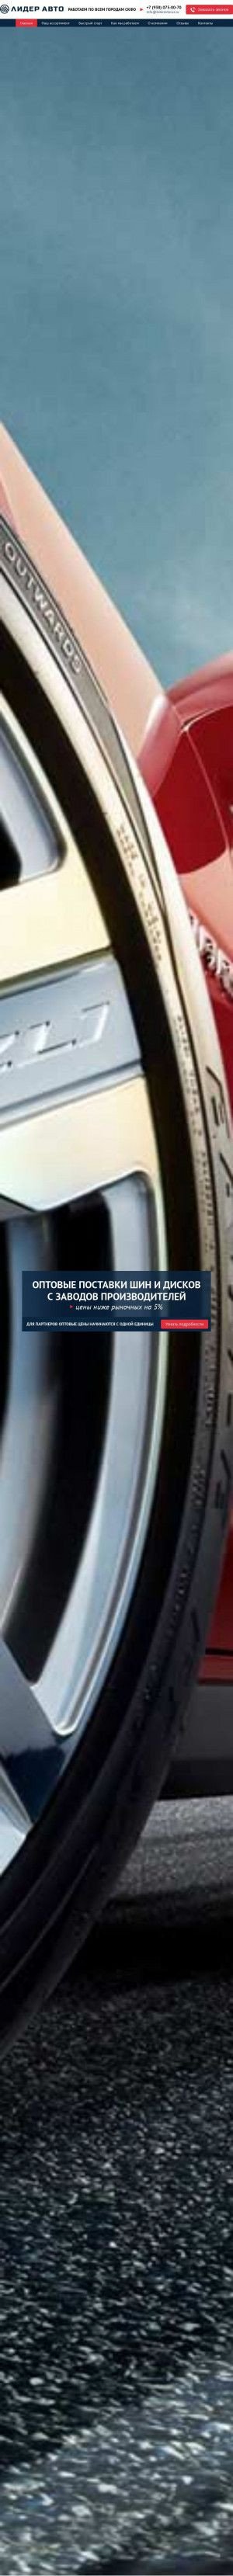 Предпросмотр для www.lideravtorus.ru — Лидер-авто